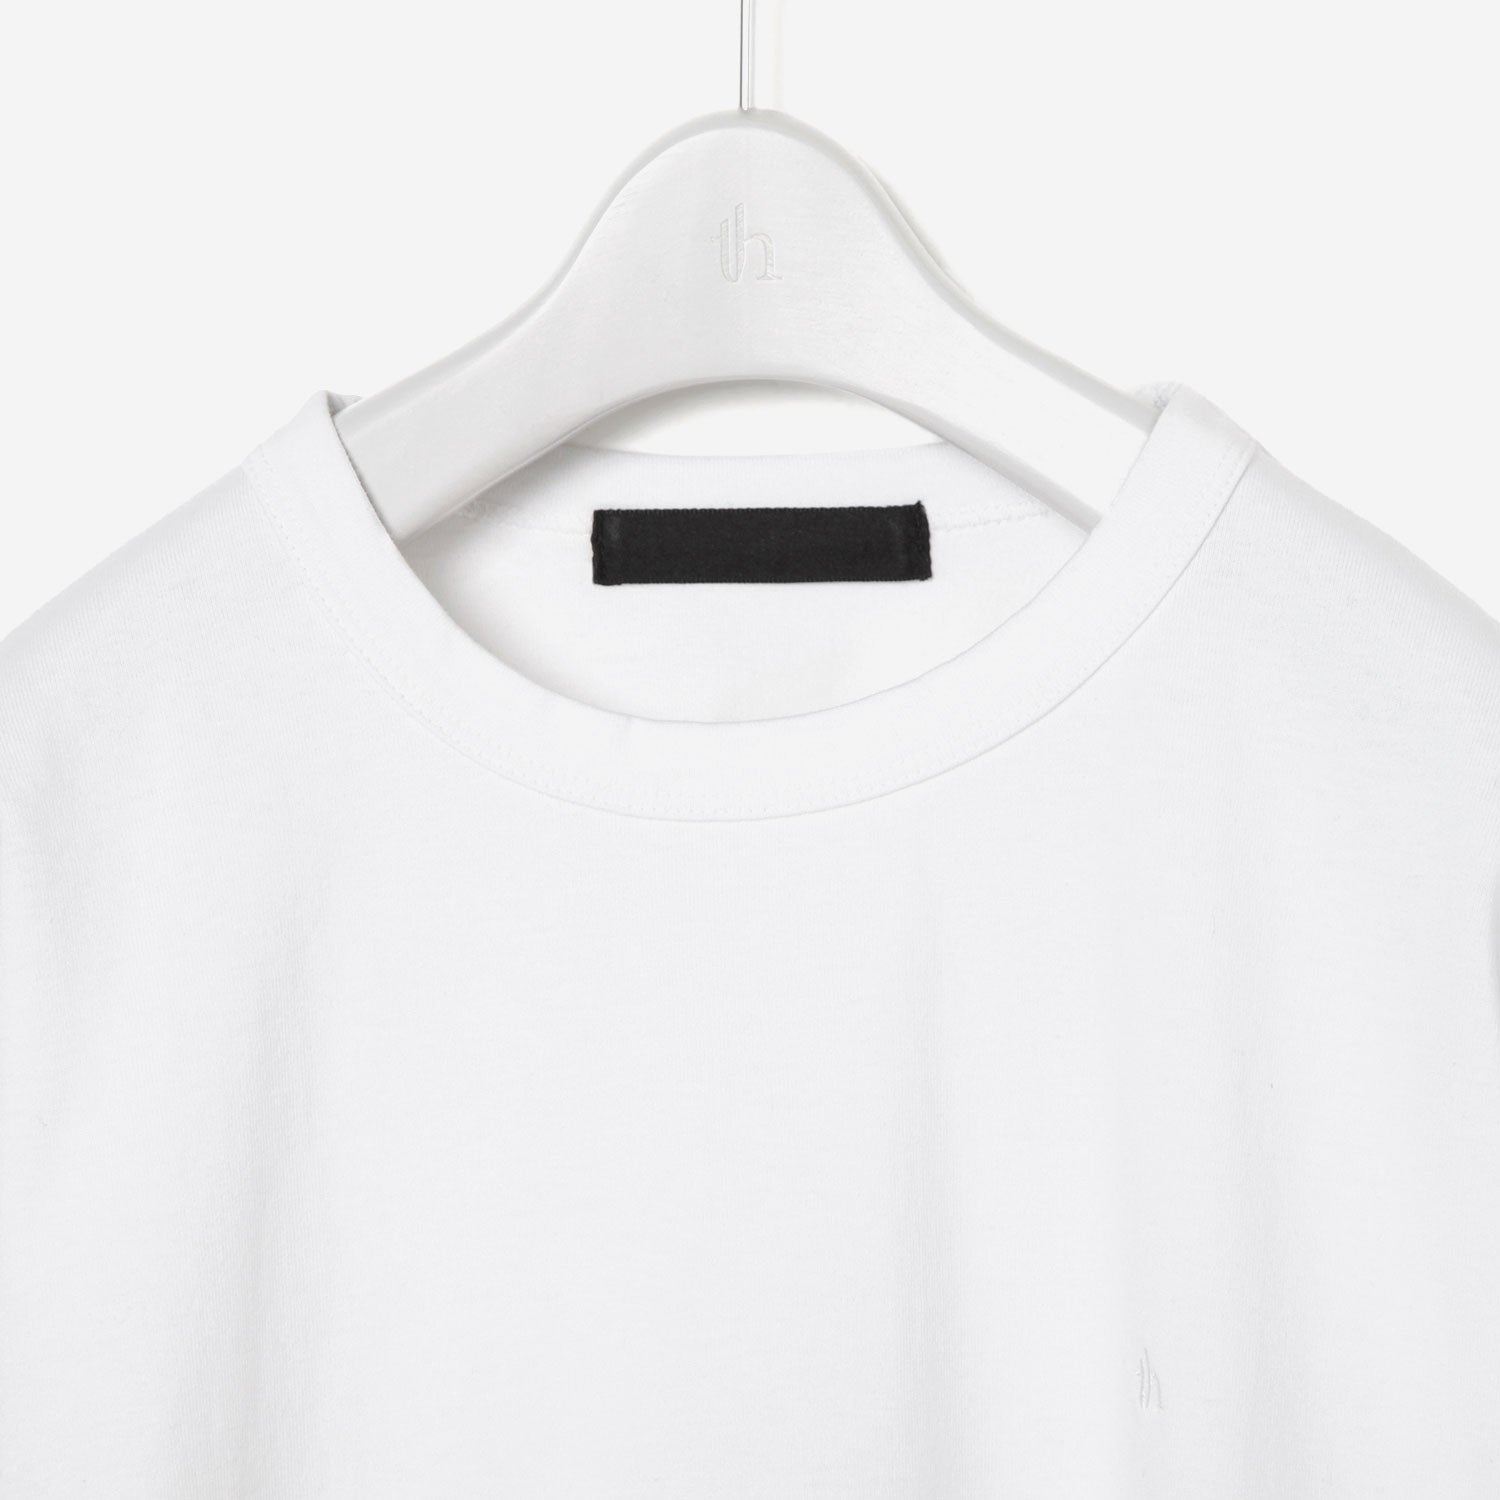 Tec Long Sleeve T-Shirt / white